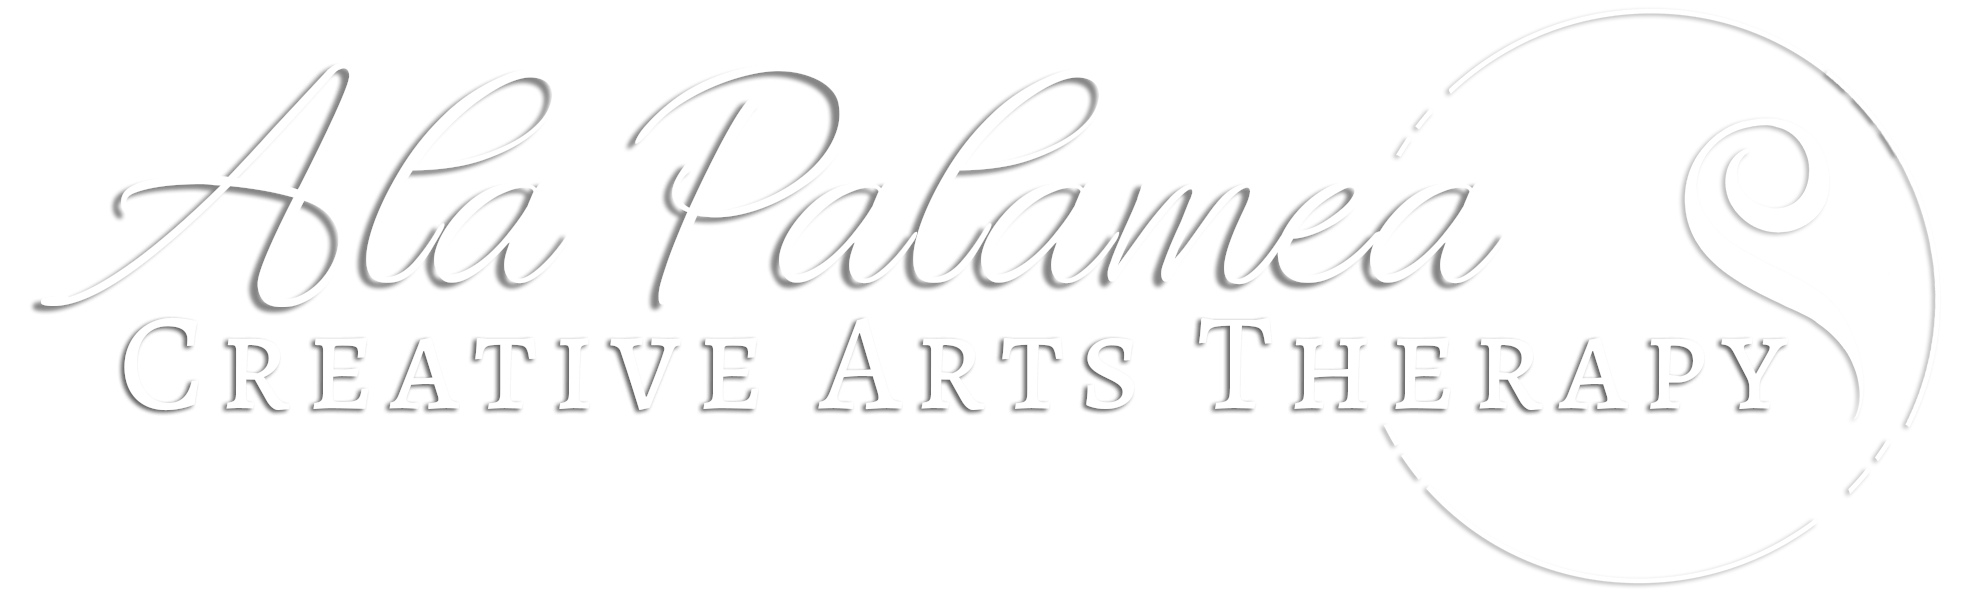 Ala Palamea Creative Arts Therapy